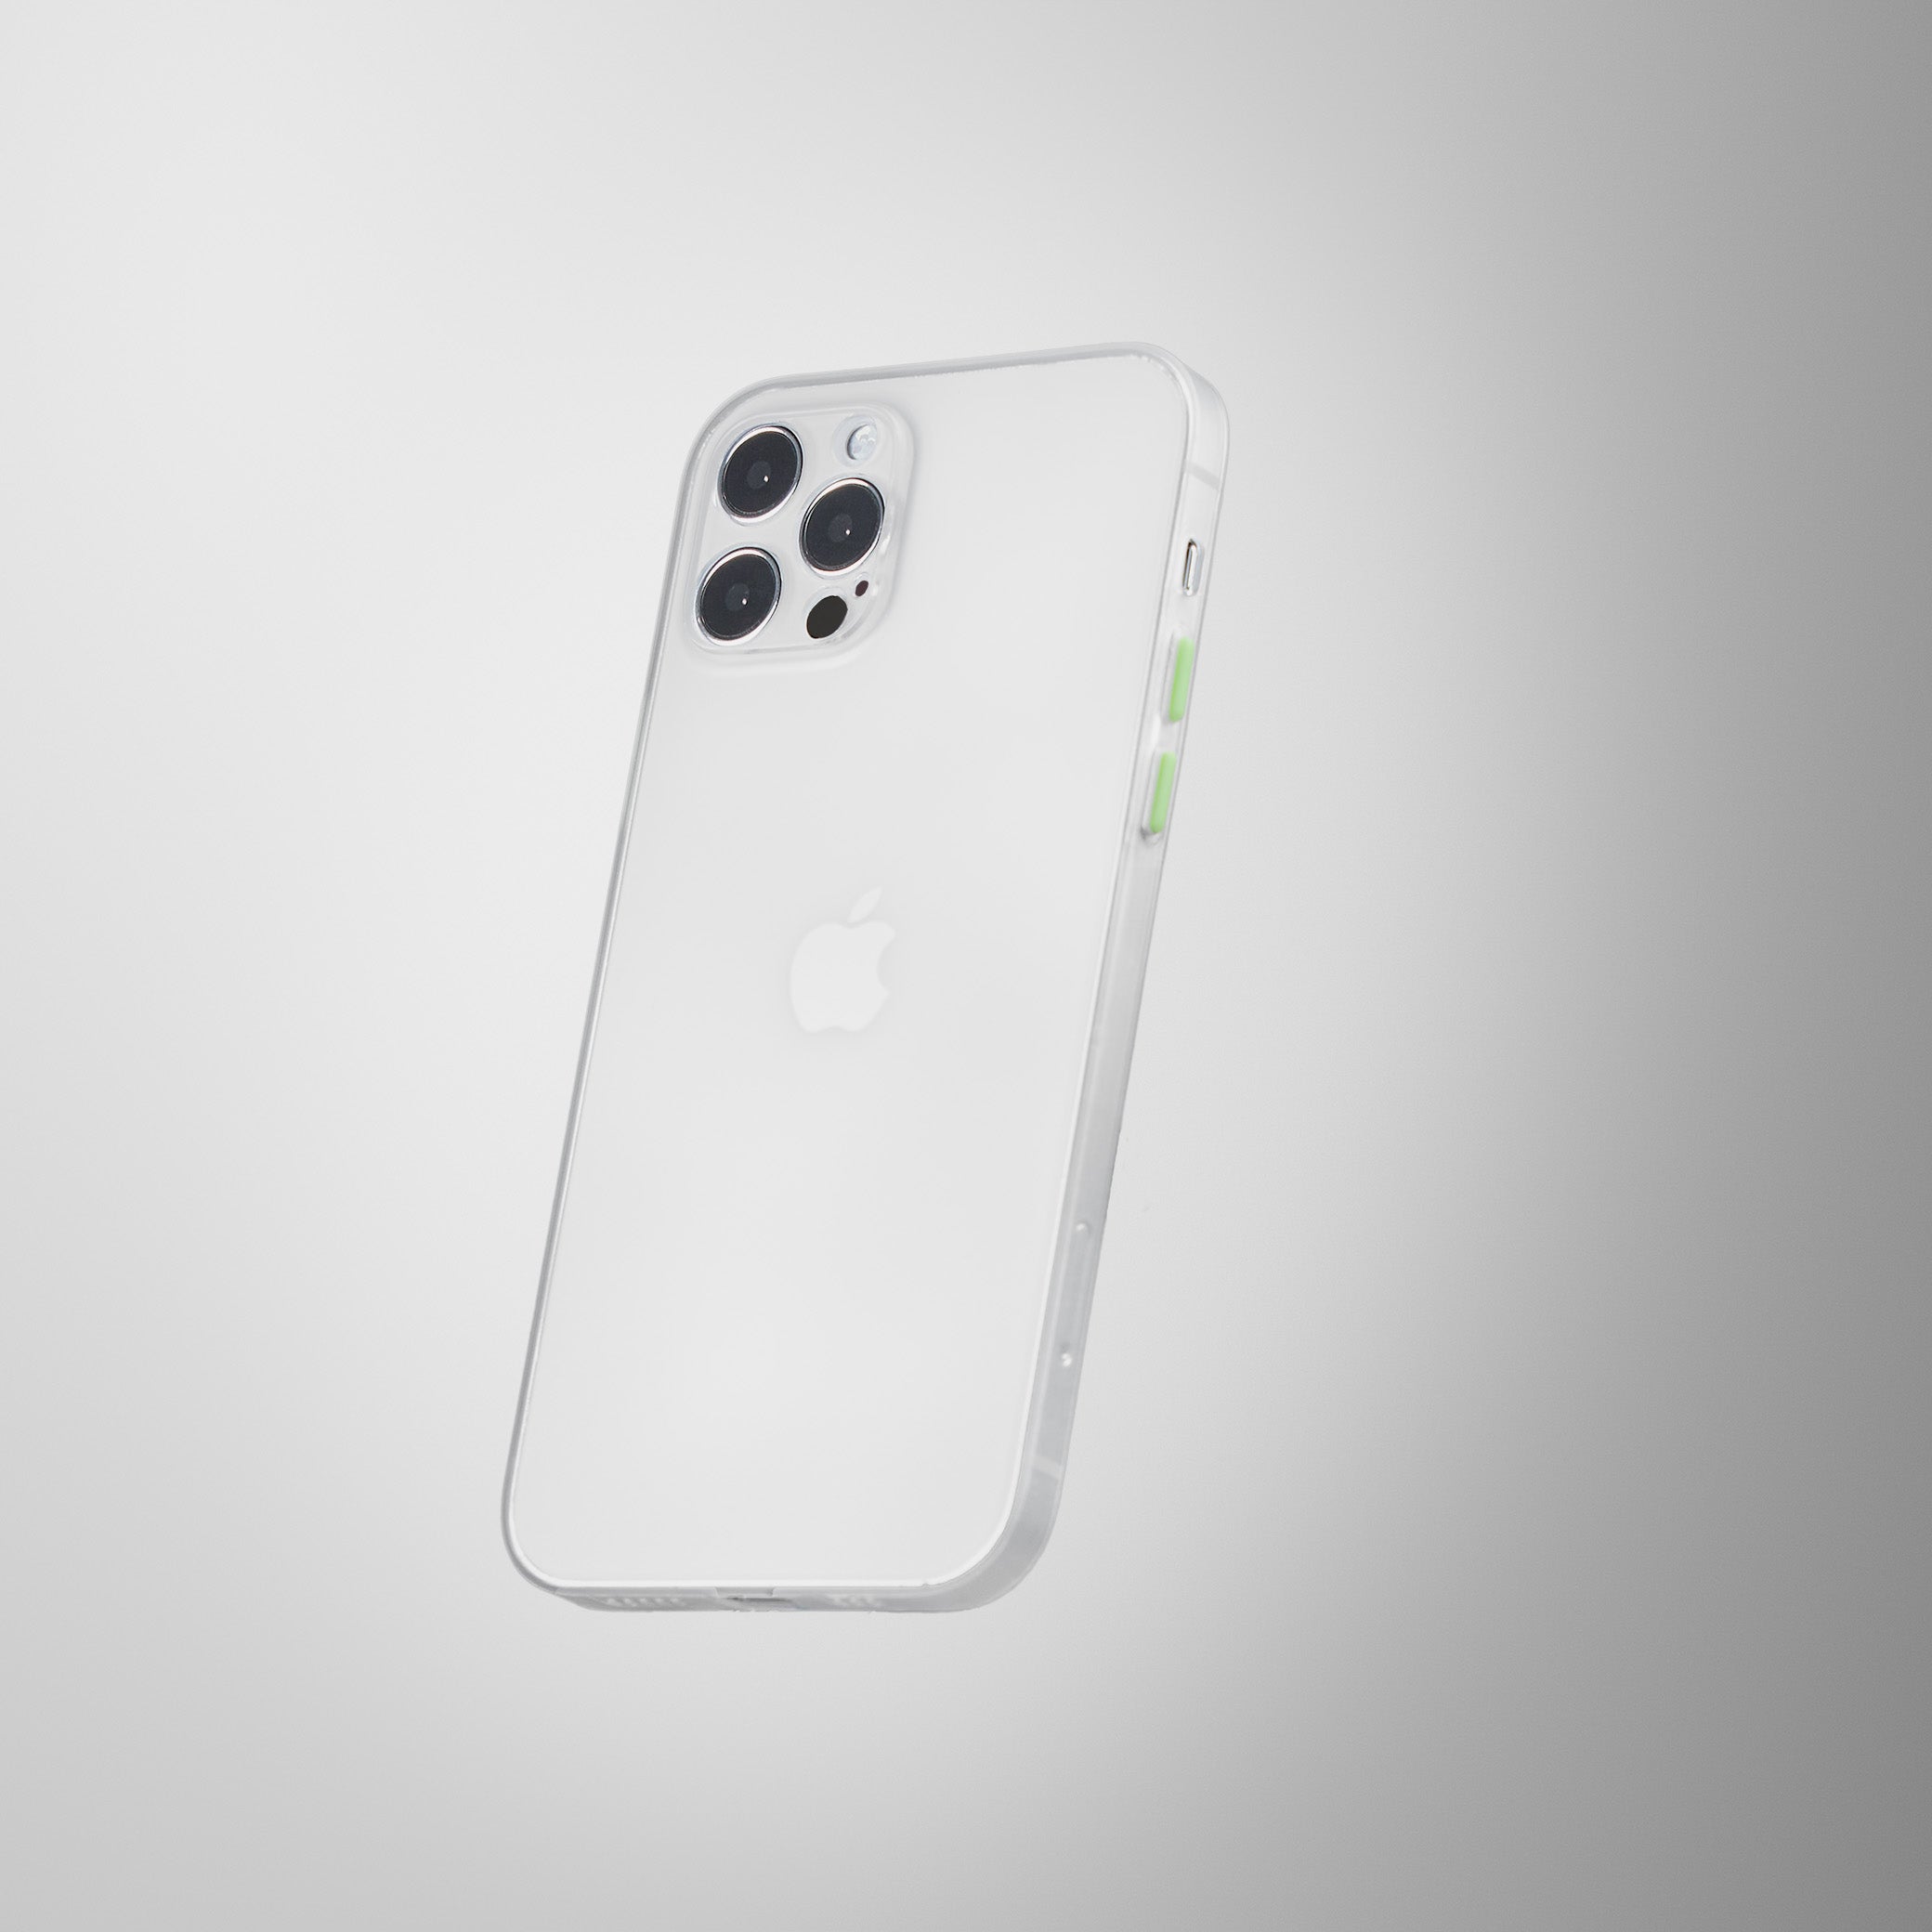 Super Slim Case 2.0 for iPhone 12 Pro Max - Glazed Frost White